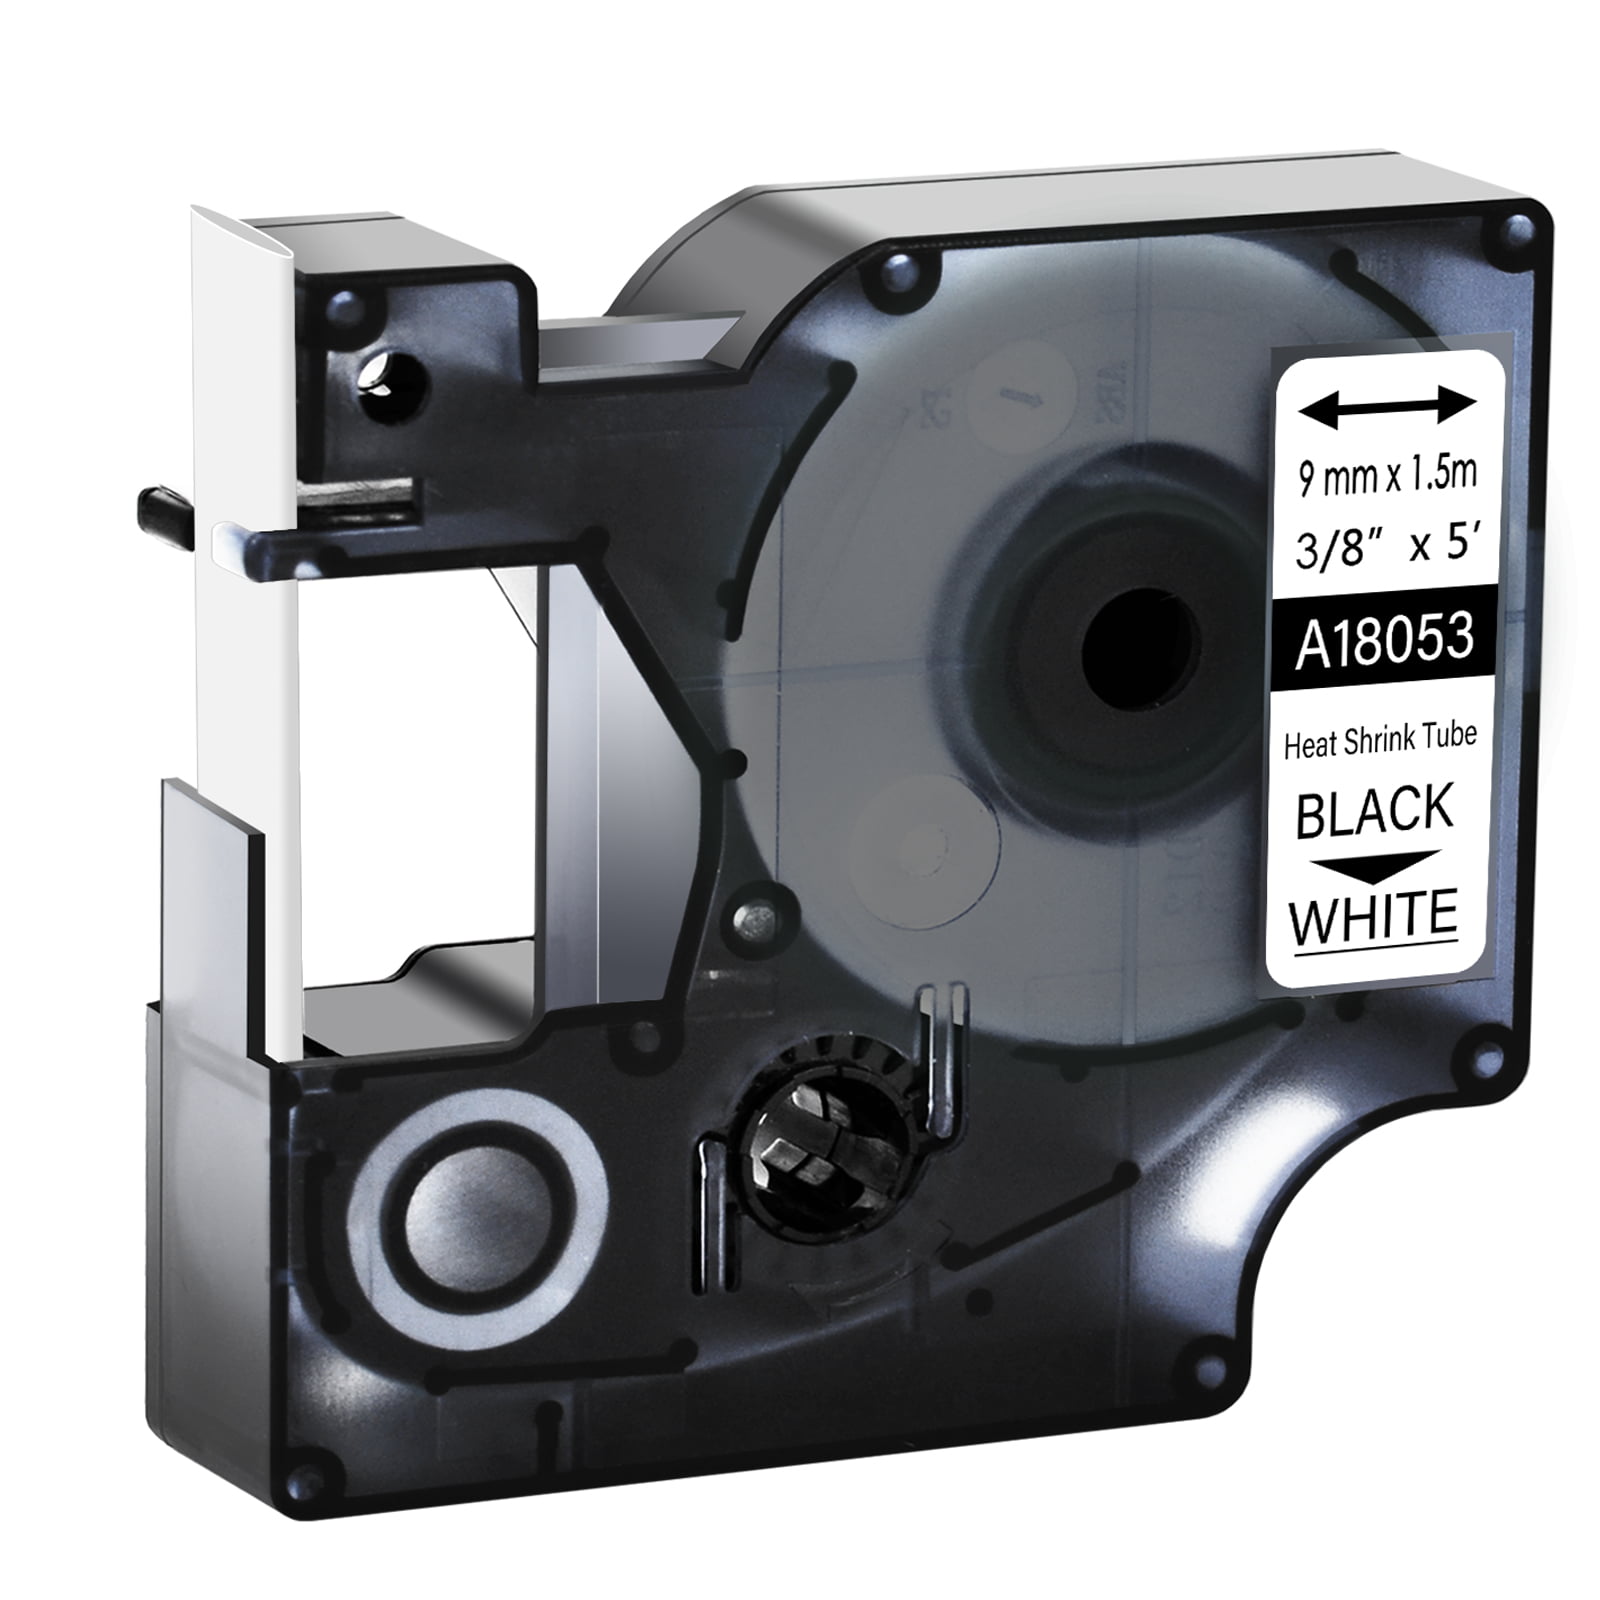 5x Heat Shrink Tube Label IND Tape Black on White 18053 For Dymo Rhino 5200 3/8" 